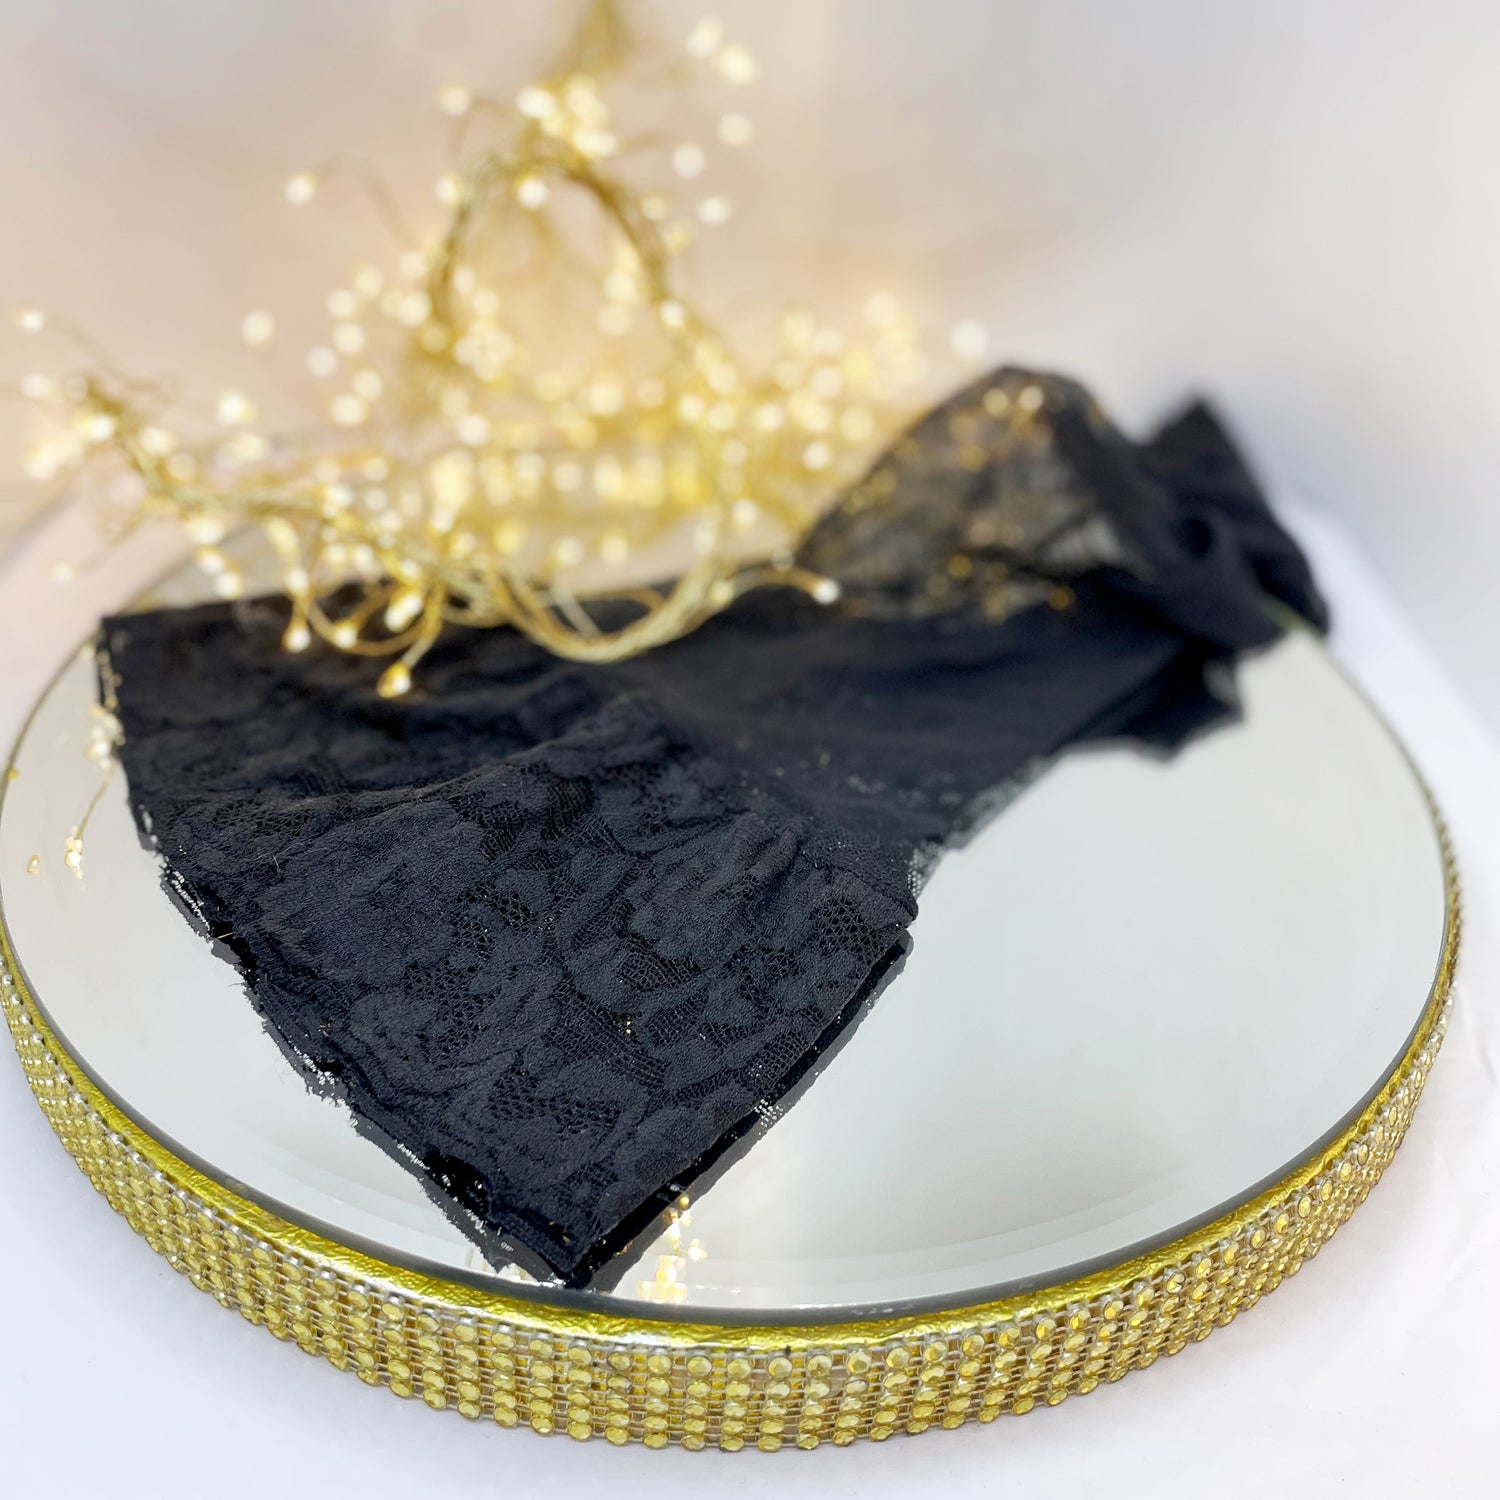 black stocking on a mirror platter